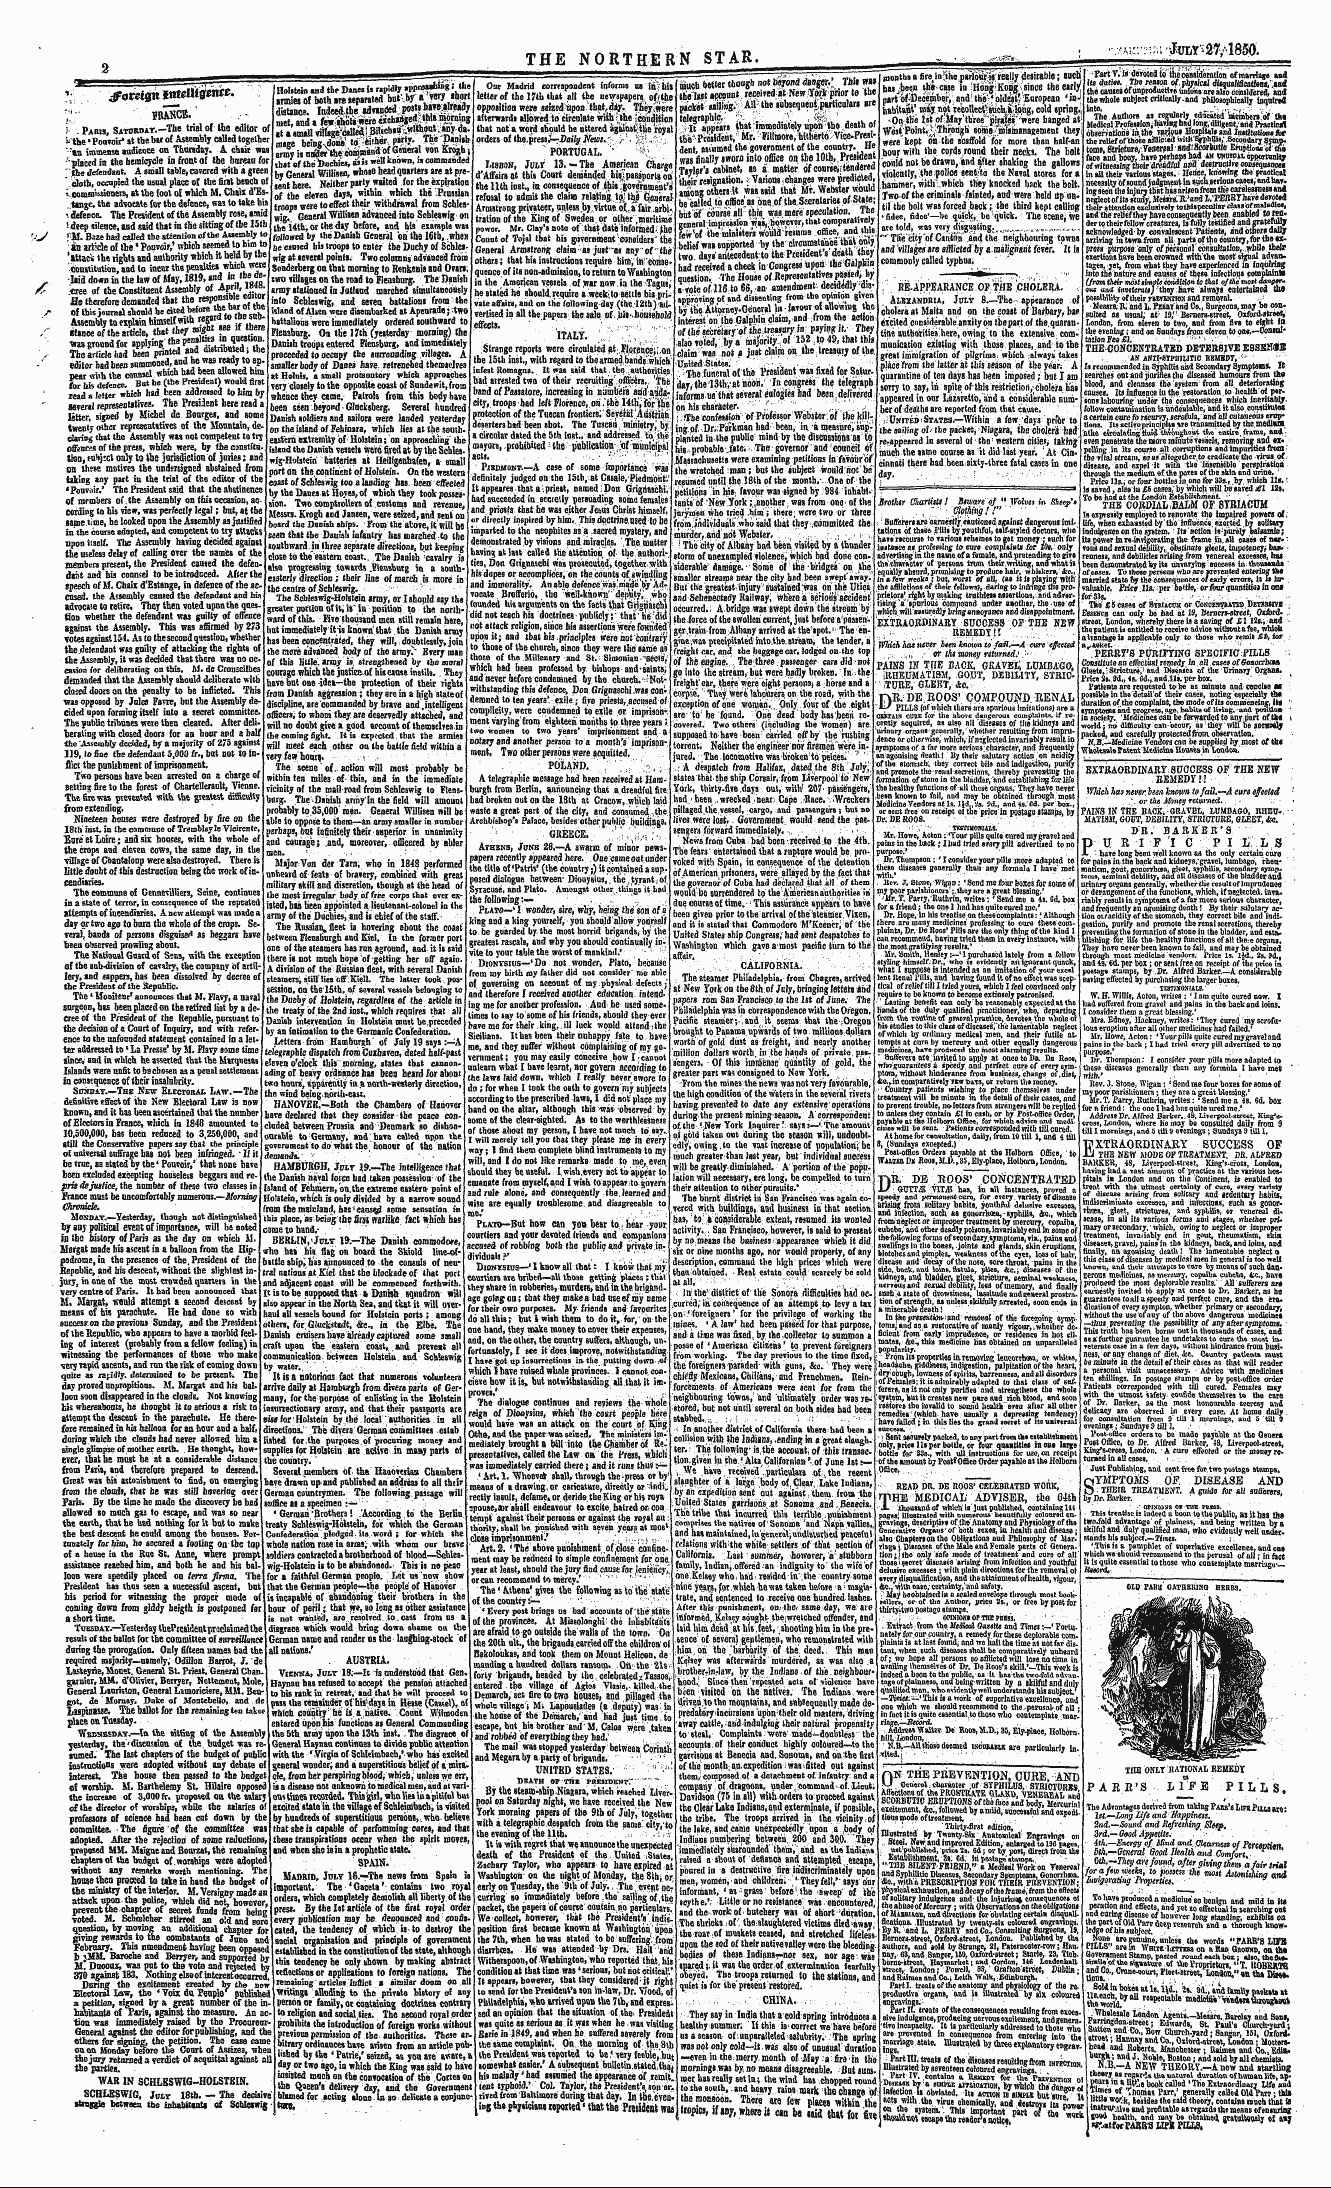 Northern Star (1837-1852): jS F Y, 3rd edition - Ad00215